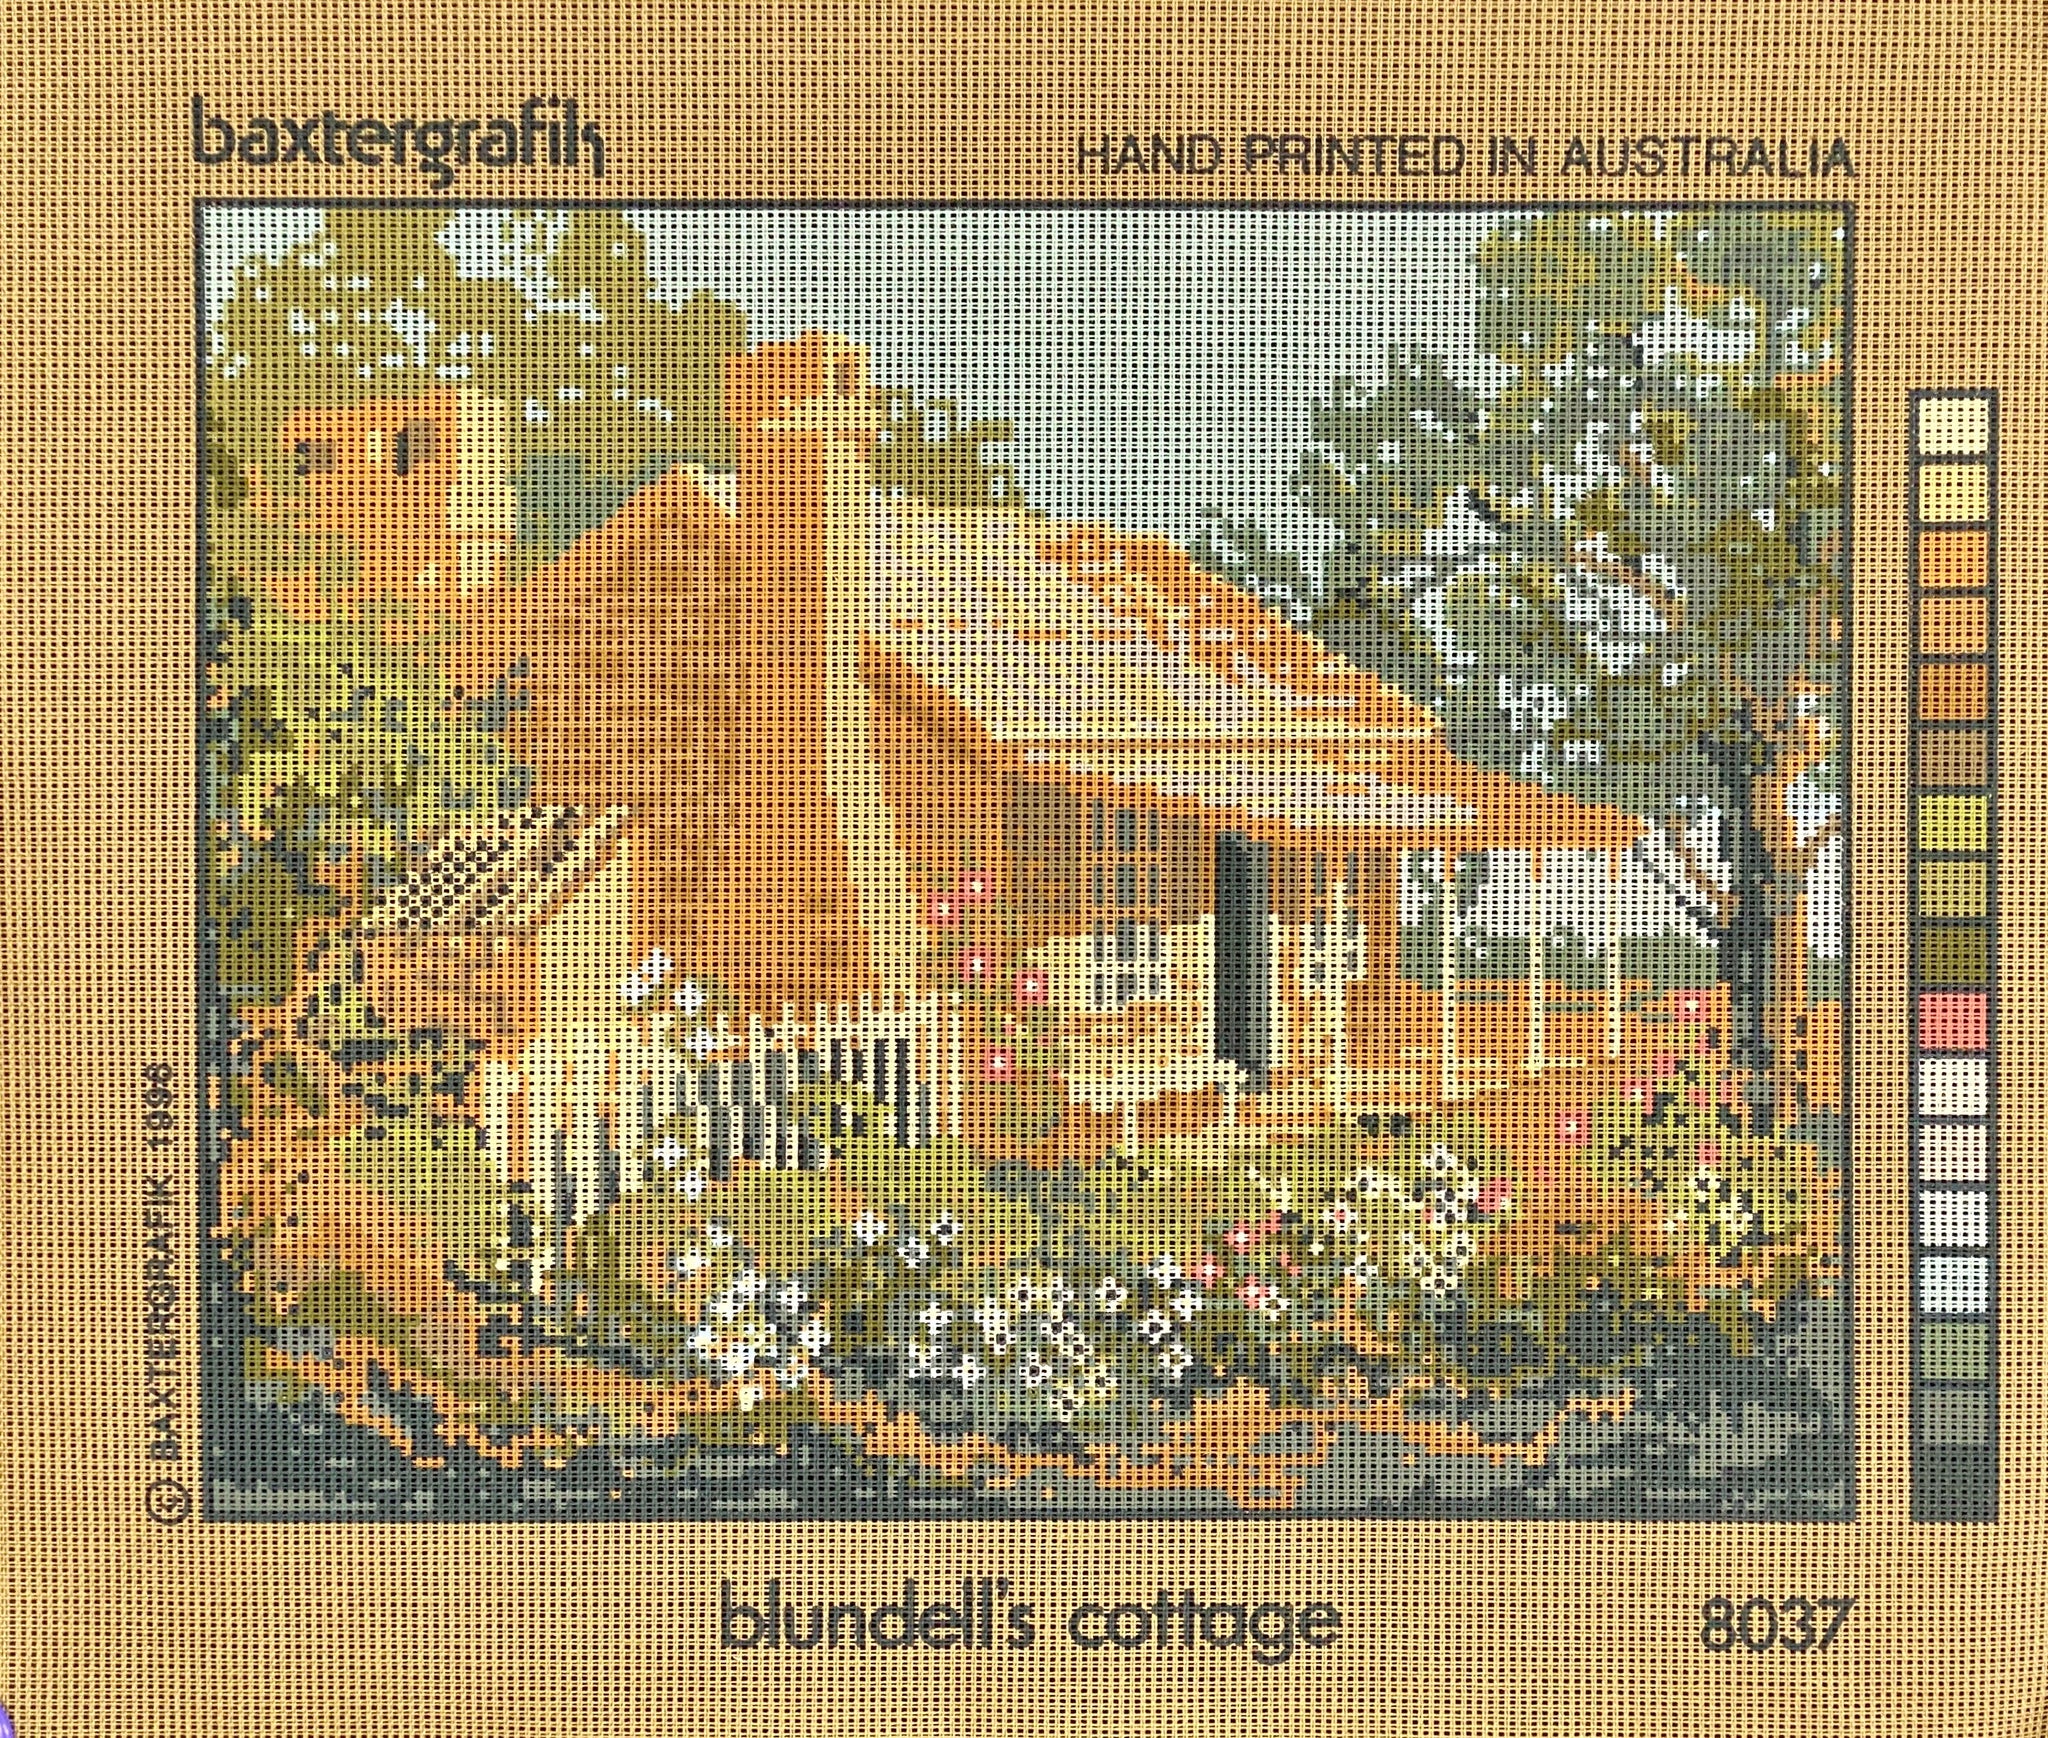 Blundell’s Cottage